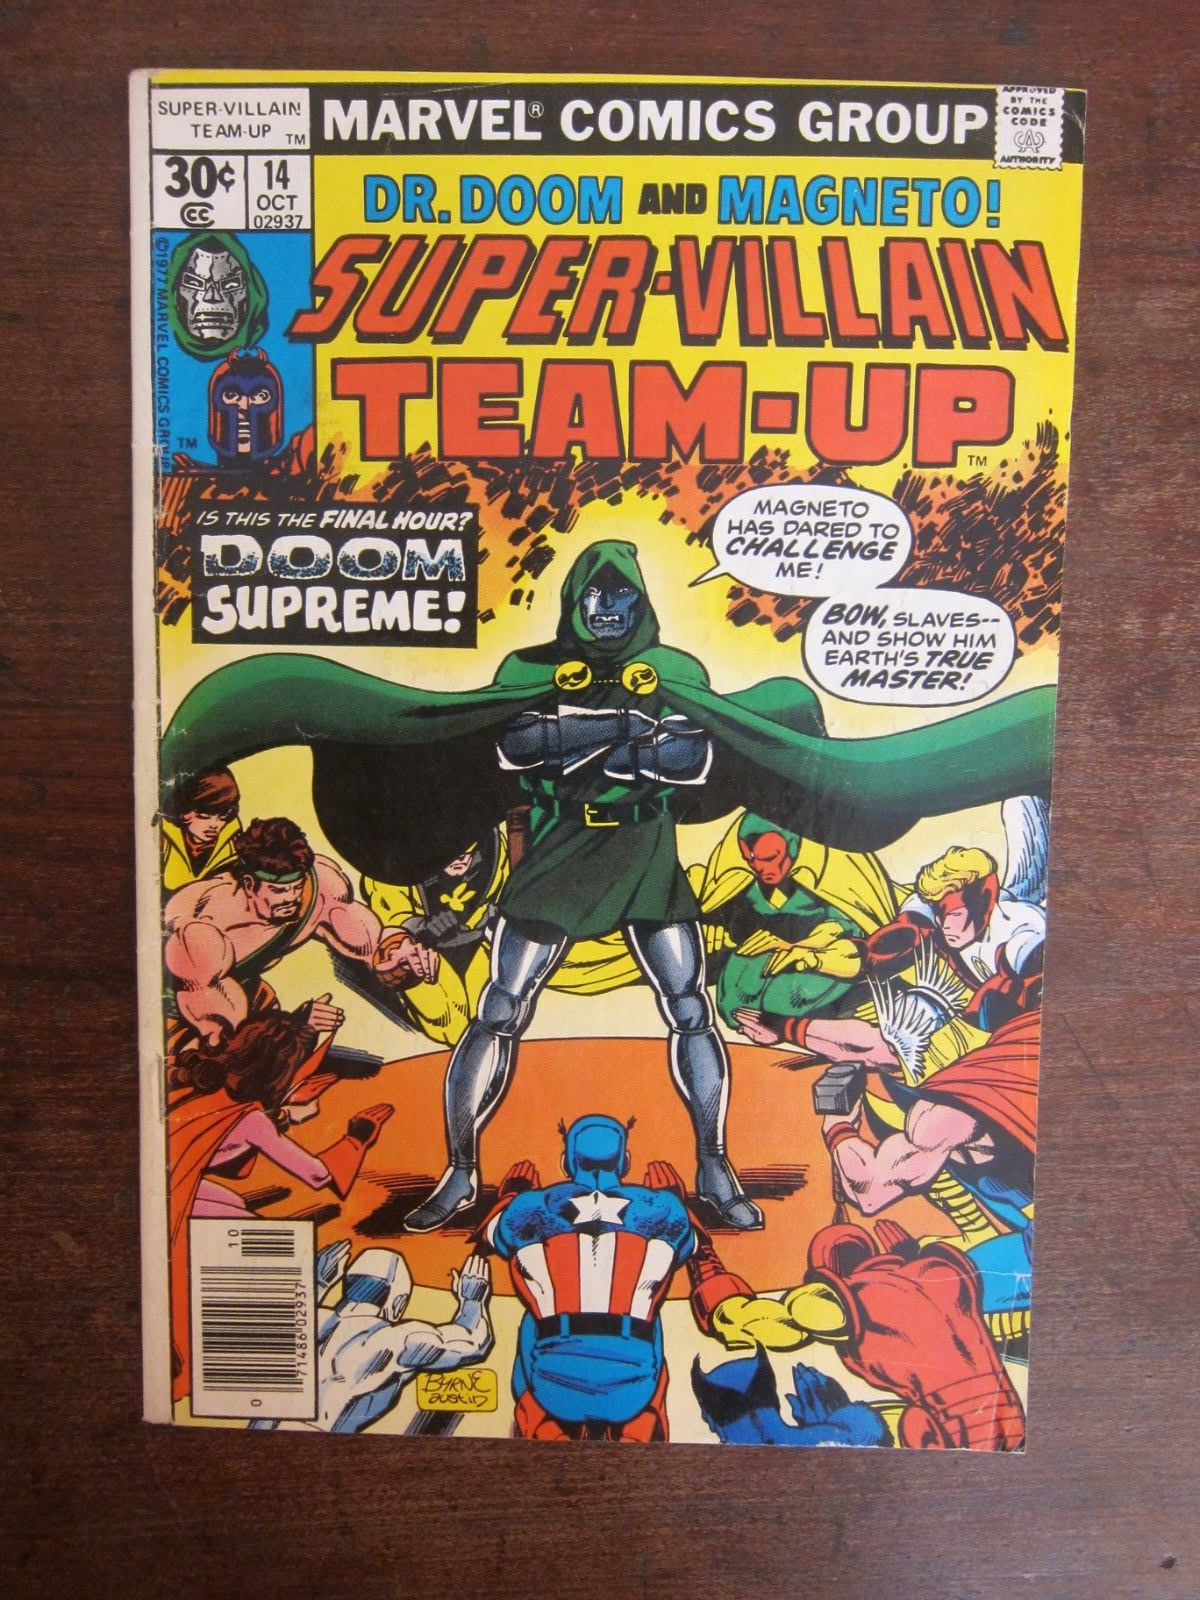 Super-Villain Team-Up #14 - Dr. Doom, Magneto, Avengers, Champions - Bronze Age